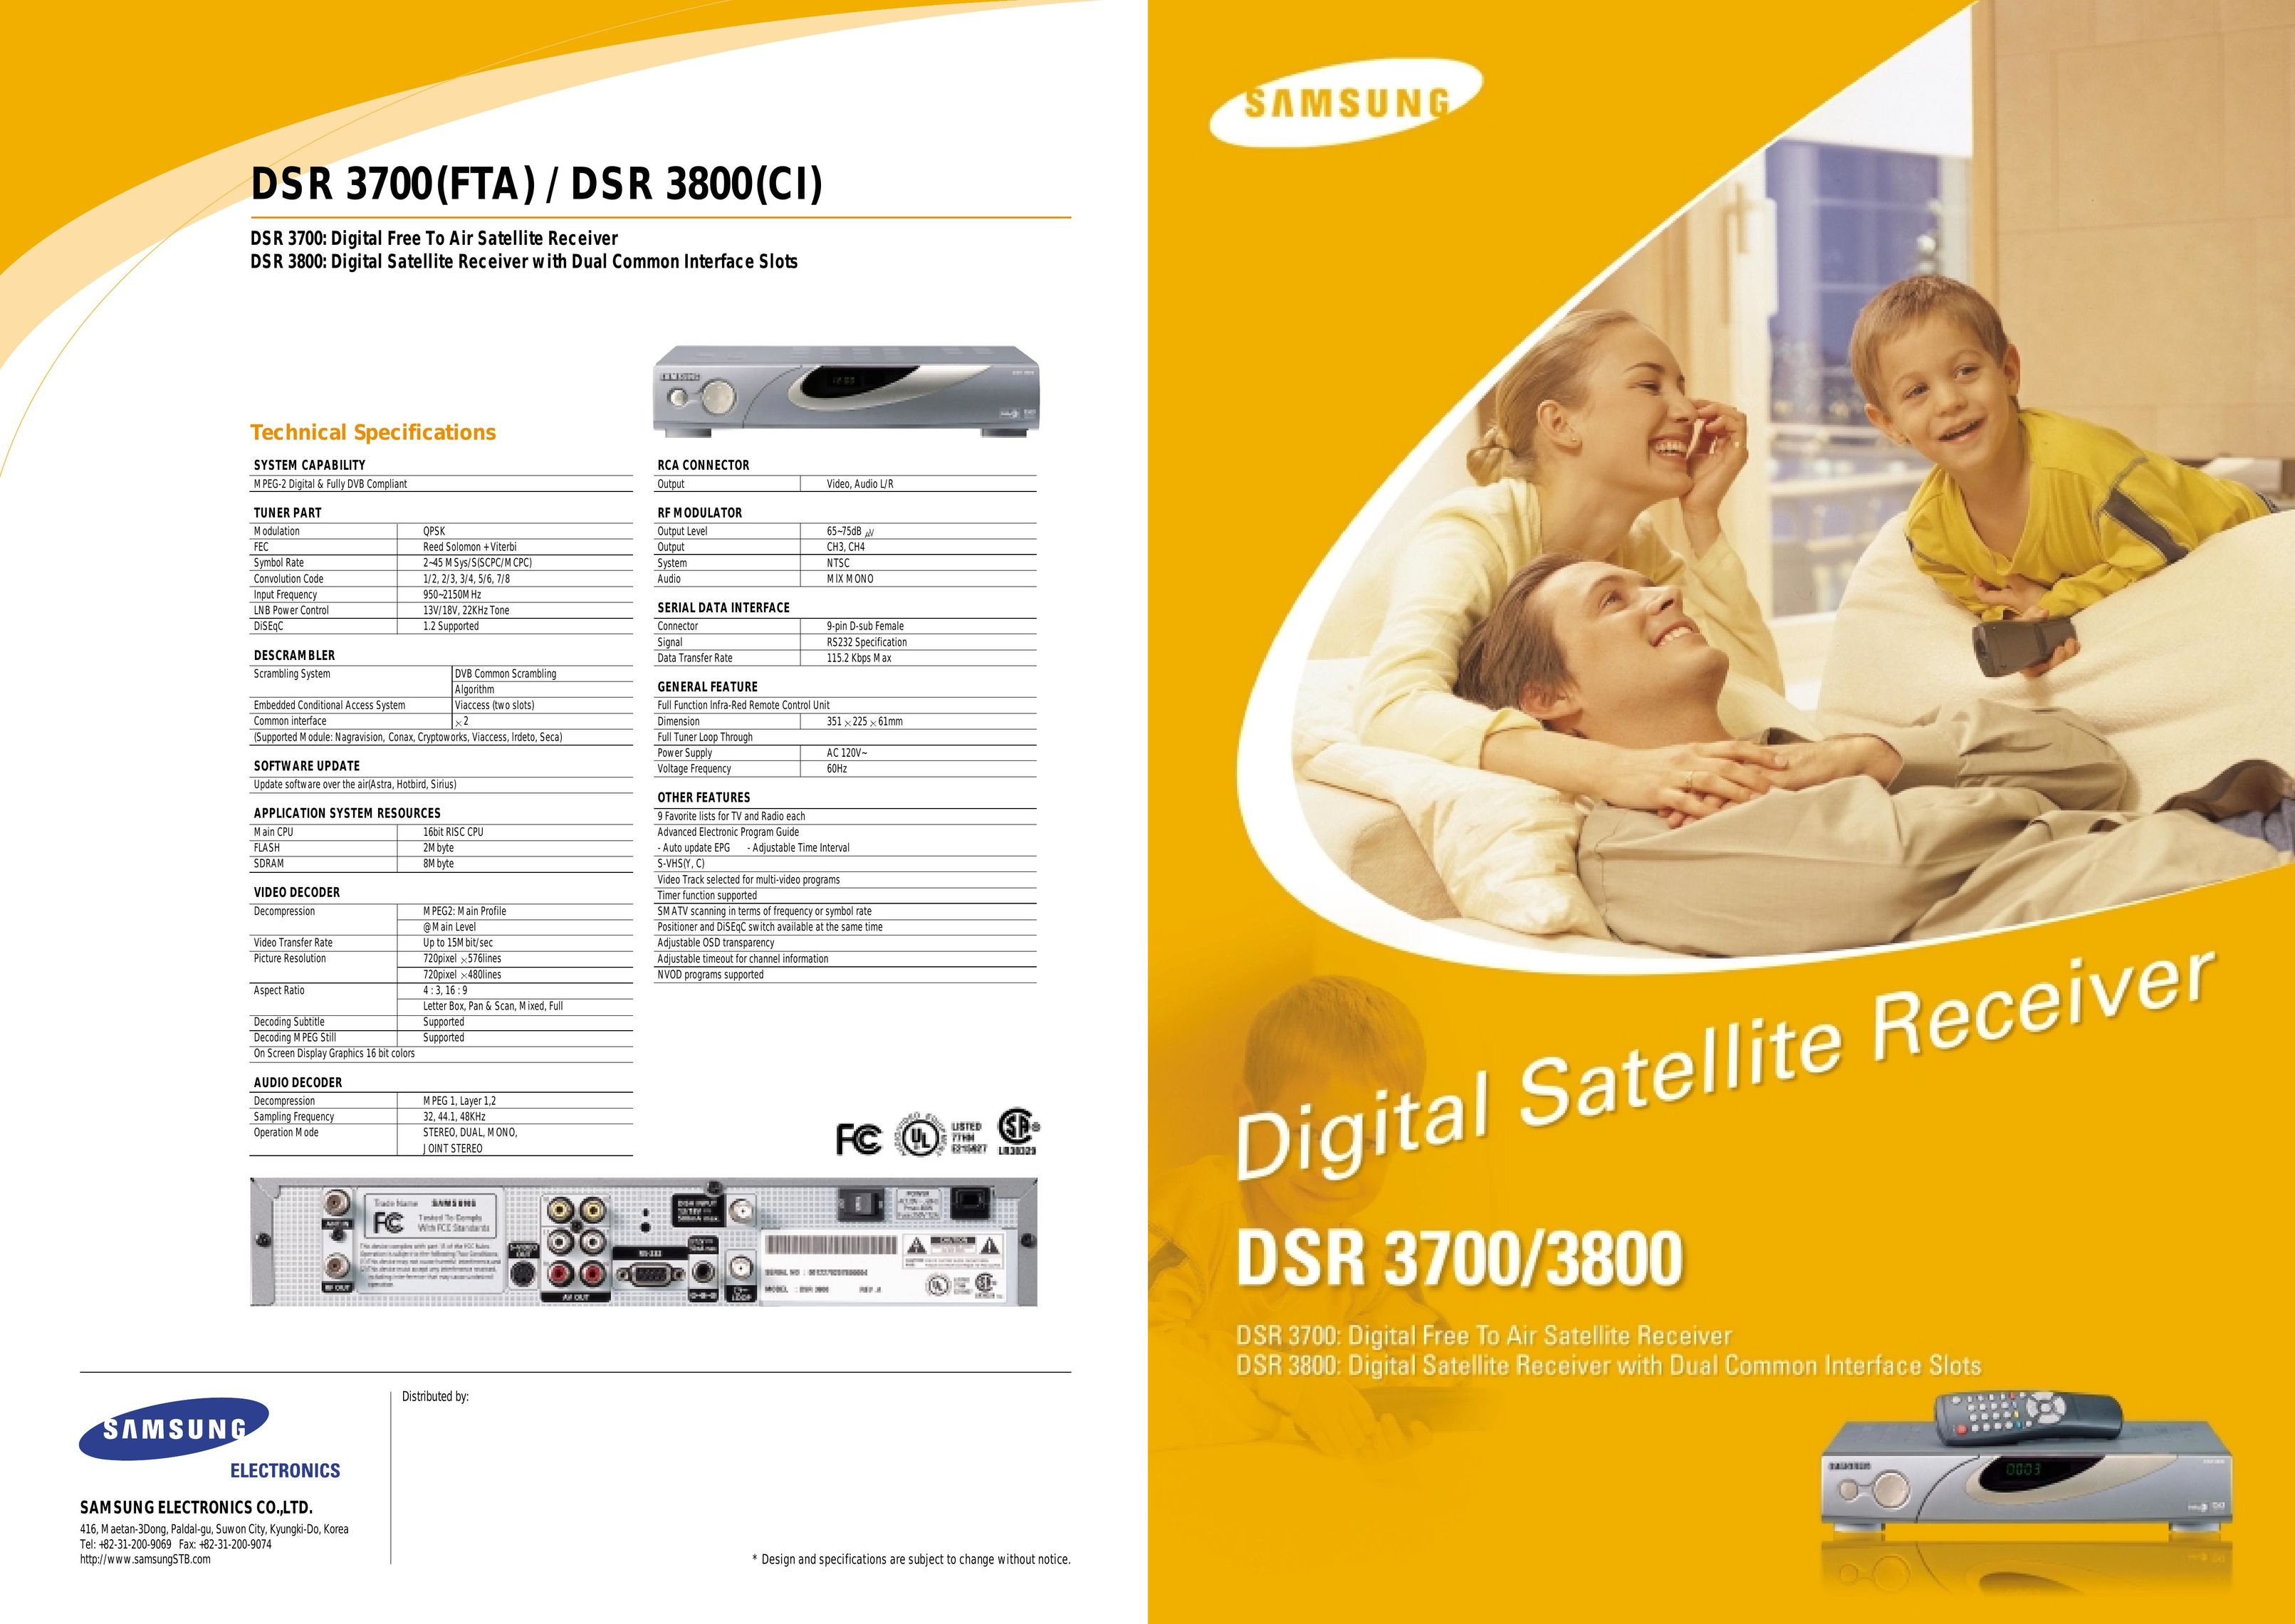 Sirius Satellite Radio DSR 3800 Satellite TV System User Manual